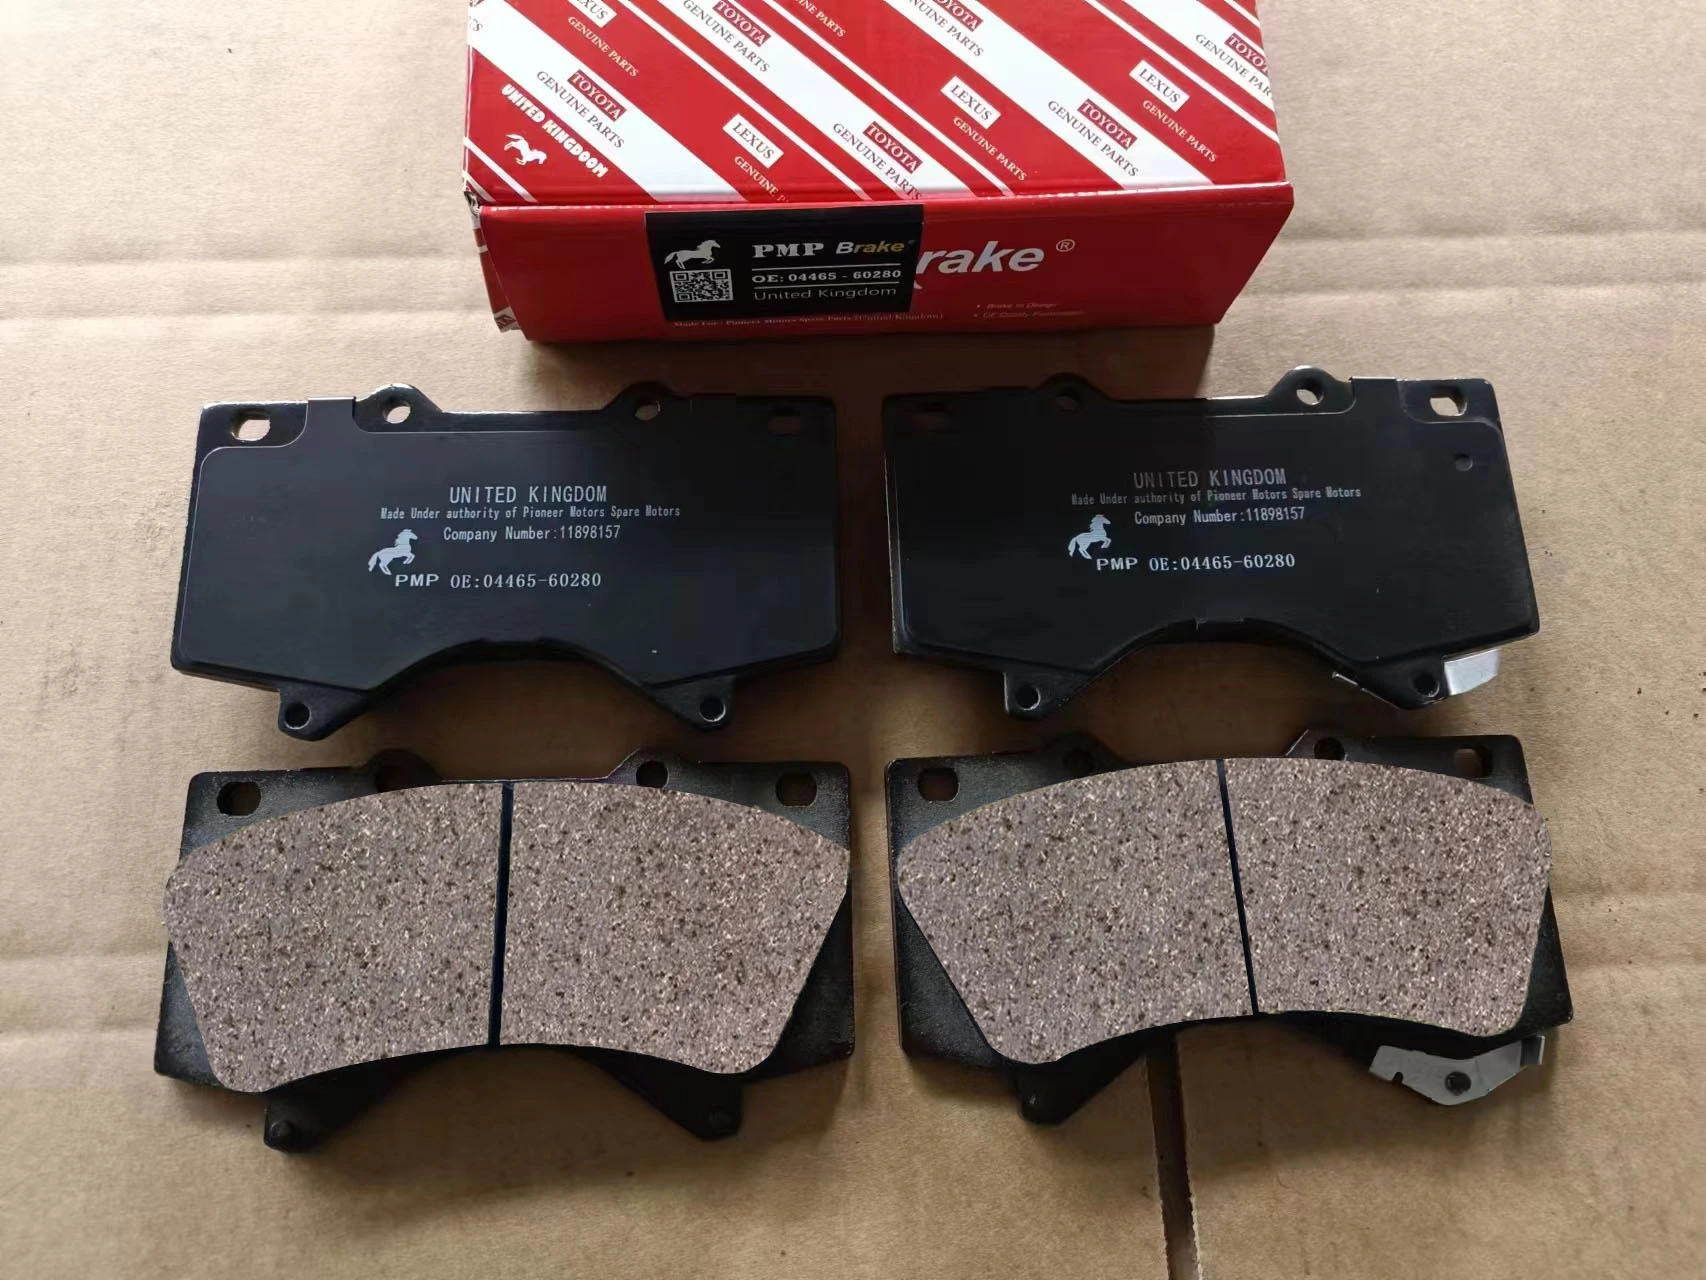 Brake pads for Toyota Corolla: Cars semi metallic brake pads designed for efficient braking.